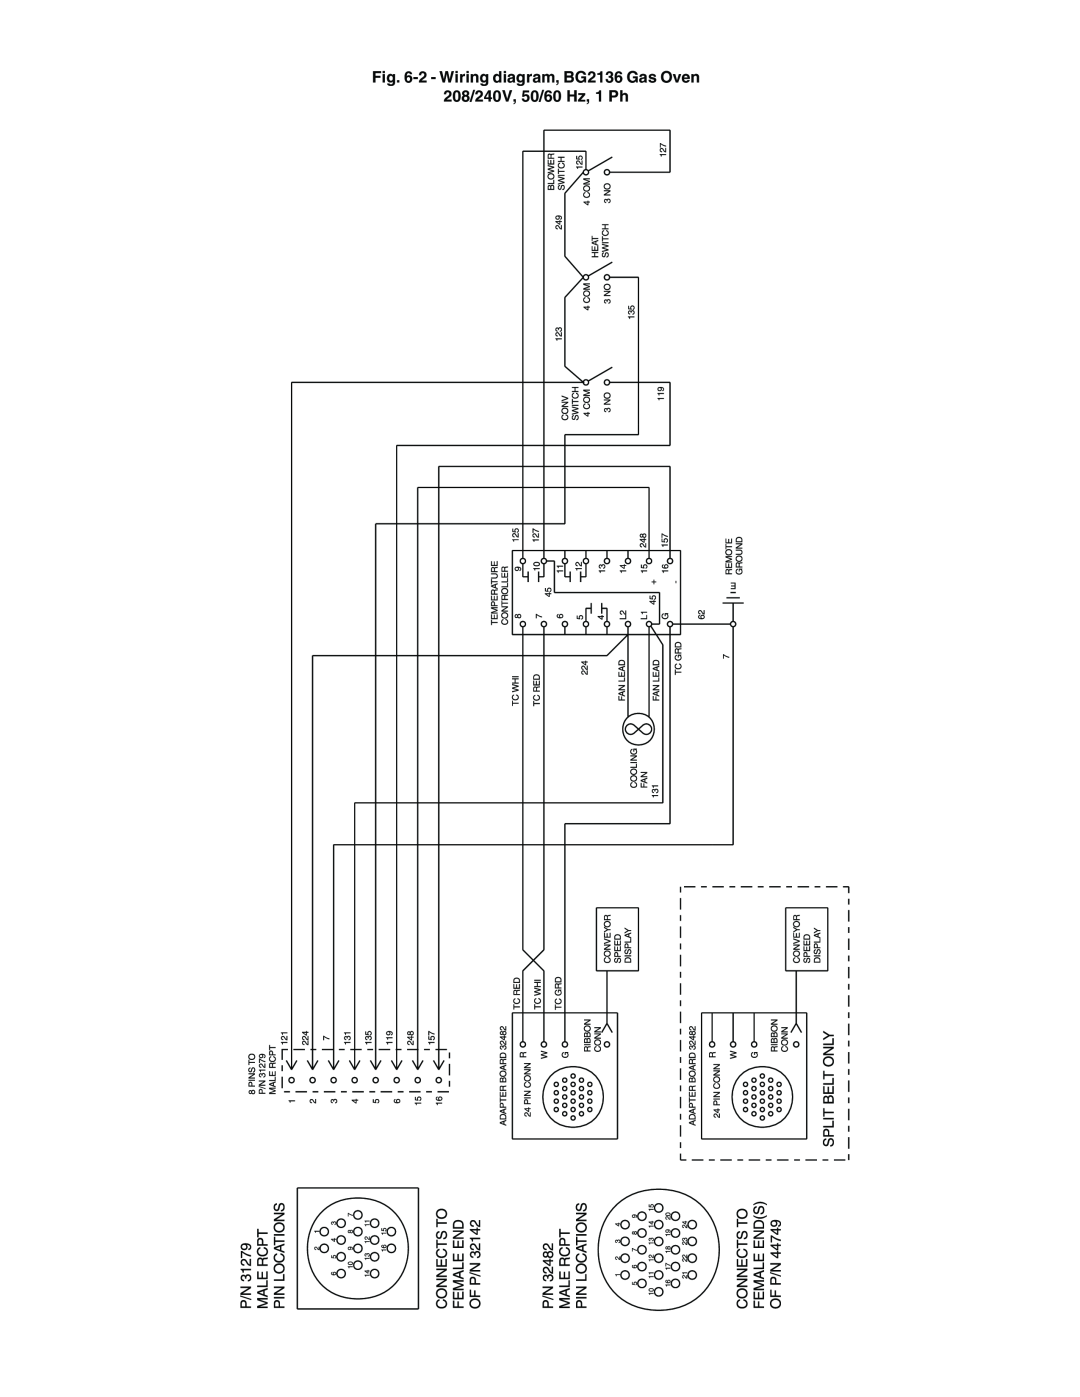 Blodgett manual 2 - Wiring diagram, BG2136 Gas Oven 208/240V, 50/60 Hz, 1 Ph 